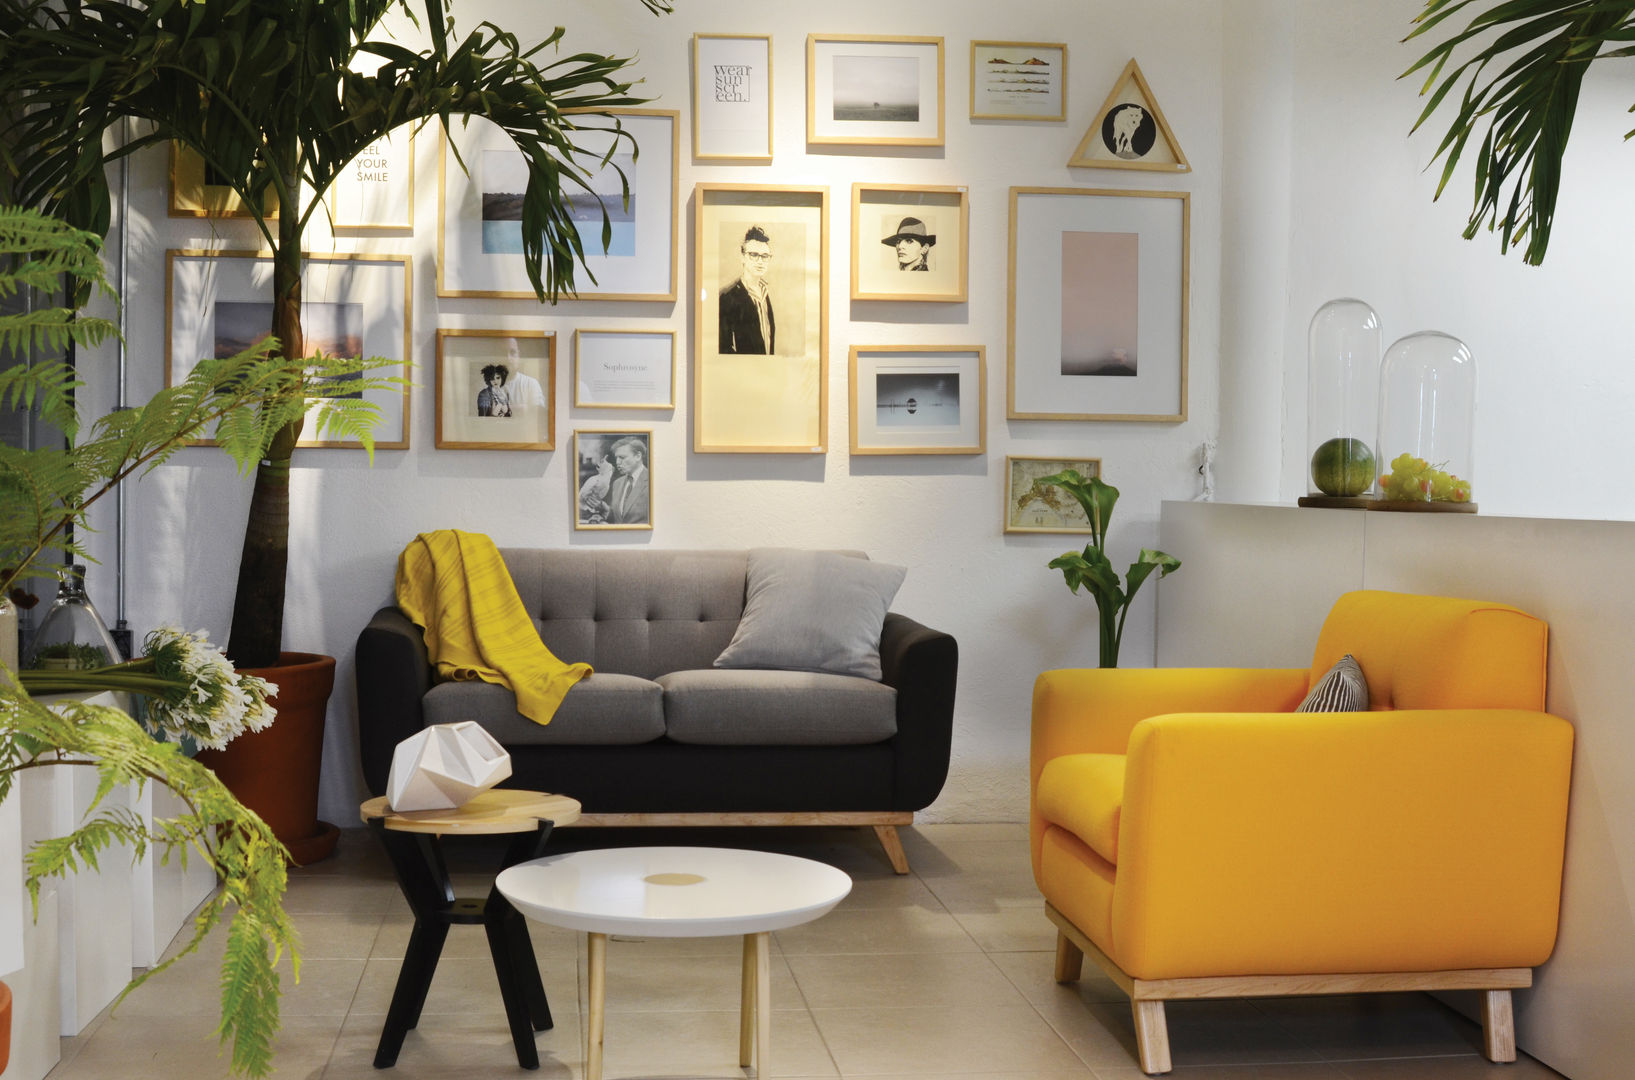 ¿cómo agregar confort a tu hogar sin gastar demasiado? ¡10 ideas!